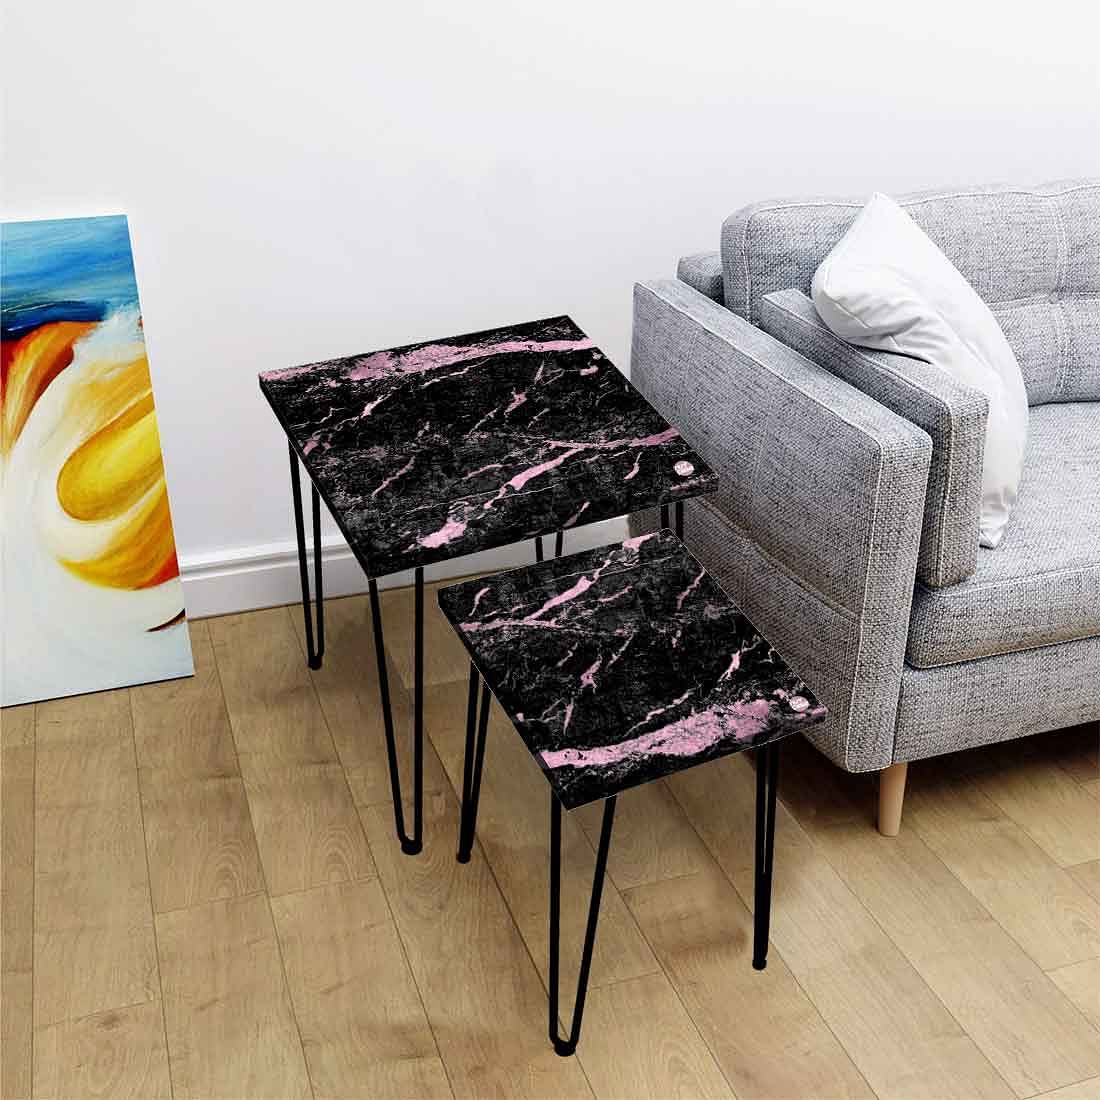 Cool Marble Nesting Side Tables for Home Kitchen Set of 2 - Pink & Black Nutcase